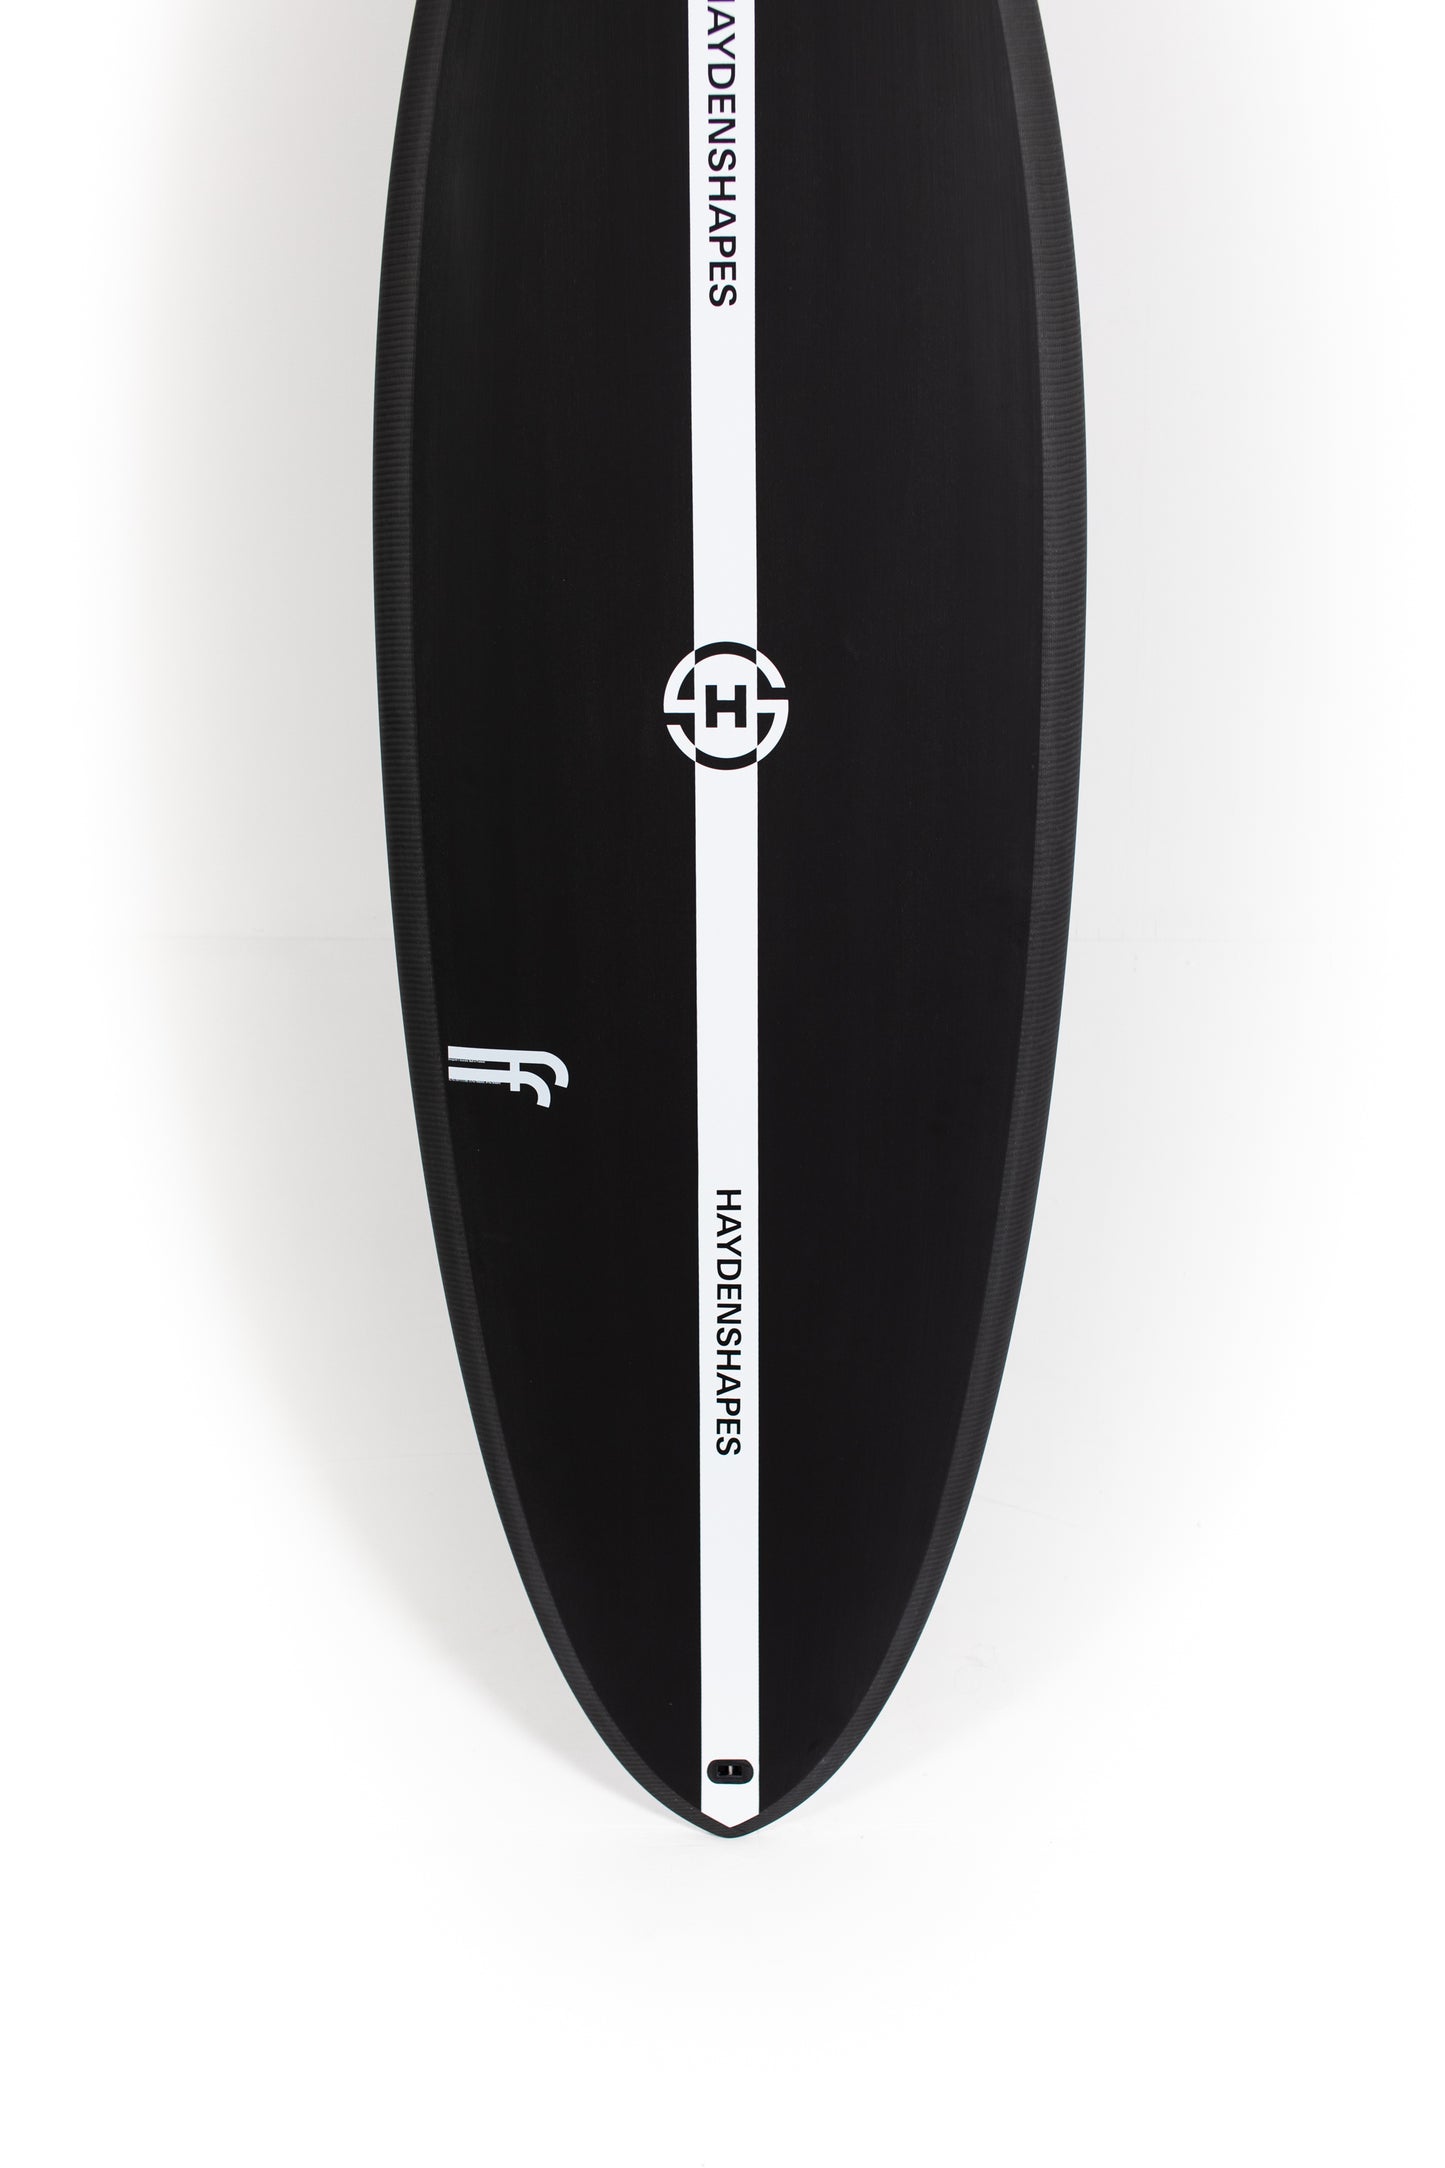 
                  
                    Pukas Surf Shop - HAYDEN SHAPES SURFBOARDS - HYPTO KRIPTO 5'7" x 19 7/8 x 2 7/16 - 29'86 - FFHK-PBI-FU3-507
                  
                